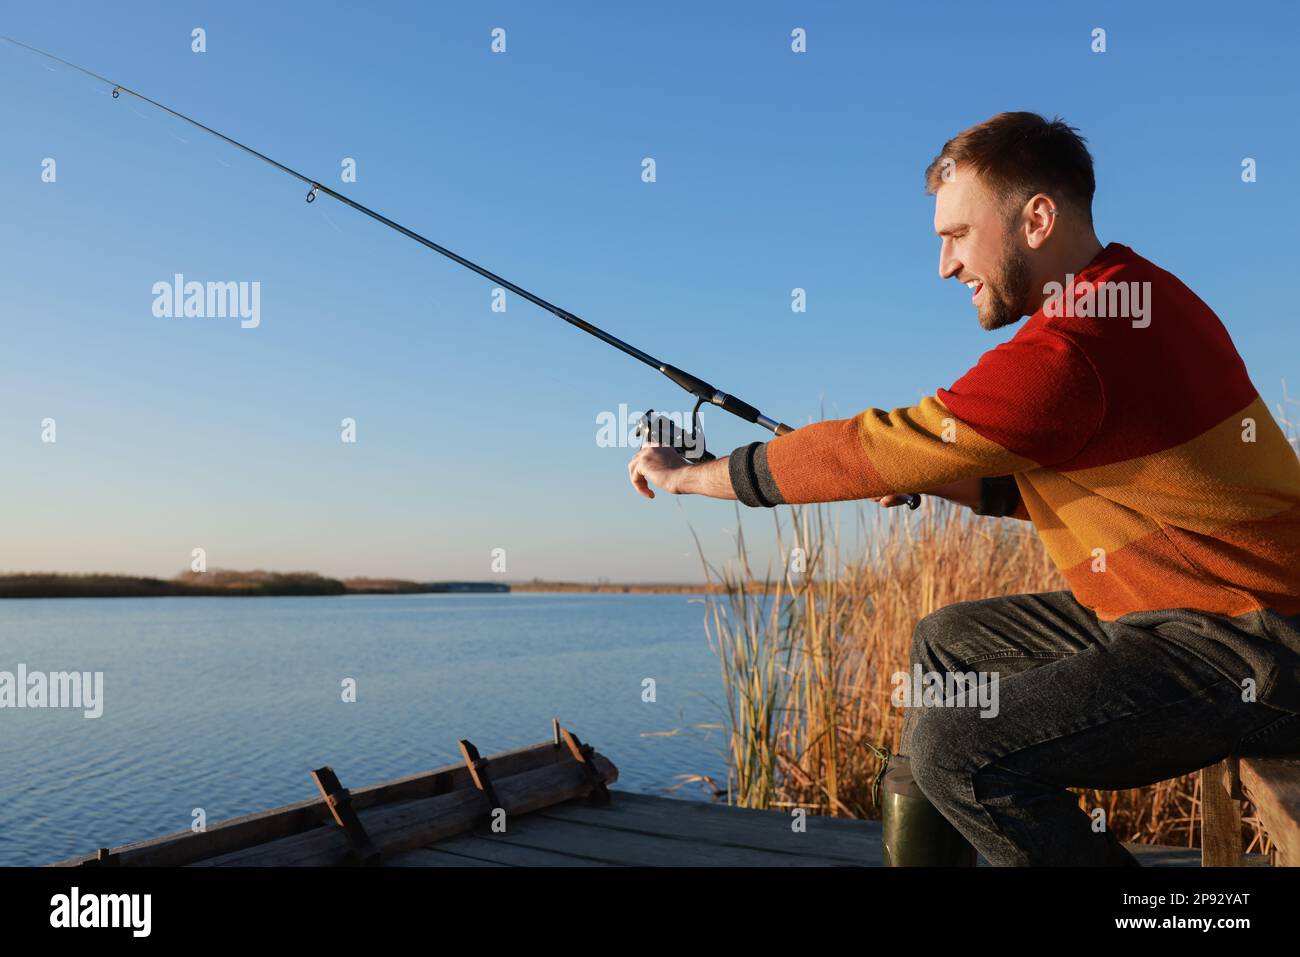 https://c8.alamy.com/comp/2P92YAT/fisherman-with-fishing-rod-at-riverside-on-sunny-day-2P92YAT.jpg